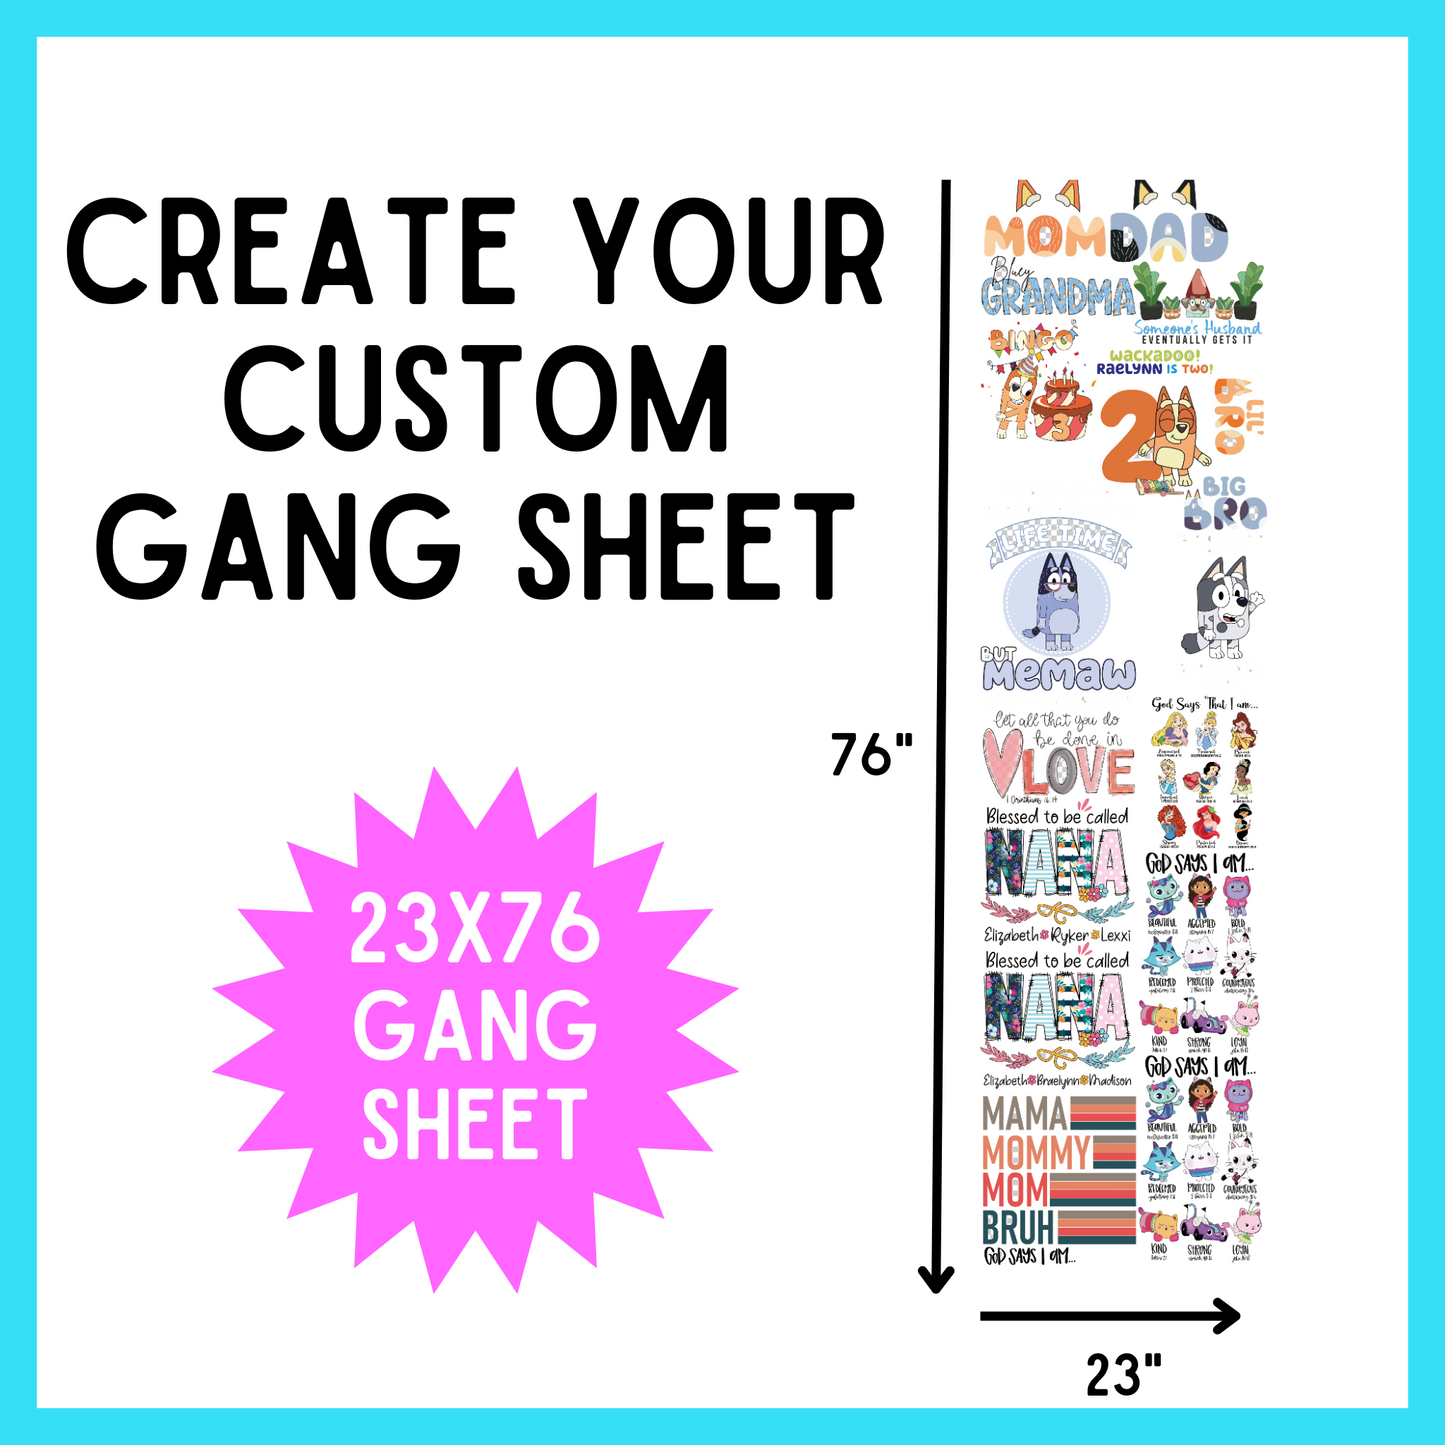 Create Your Gang Sheet | Online Builder